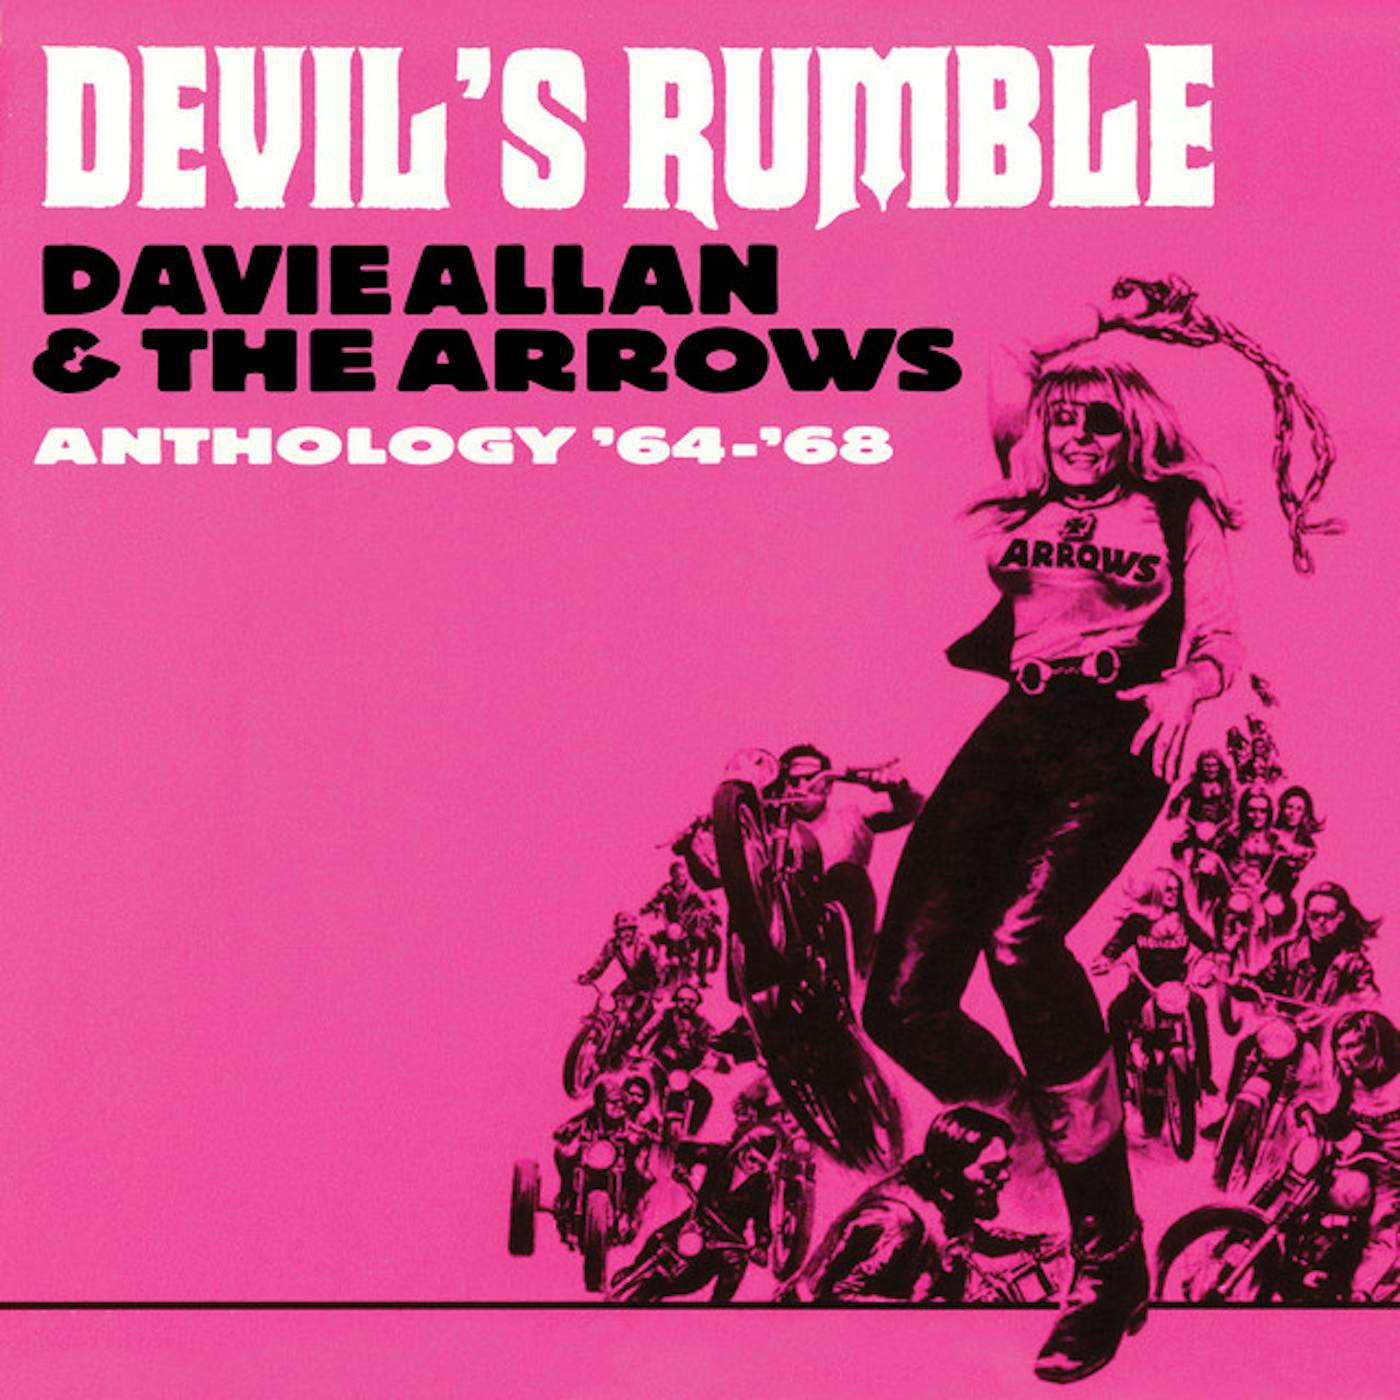 Davie Allan & The Arrows DEVIL'S RUNBLE: ANTHOLOGY 64-68 Vinyl Record